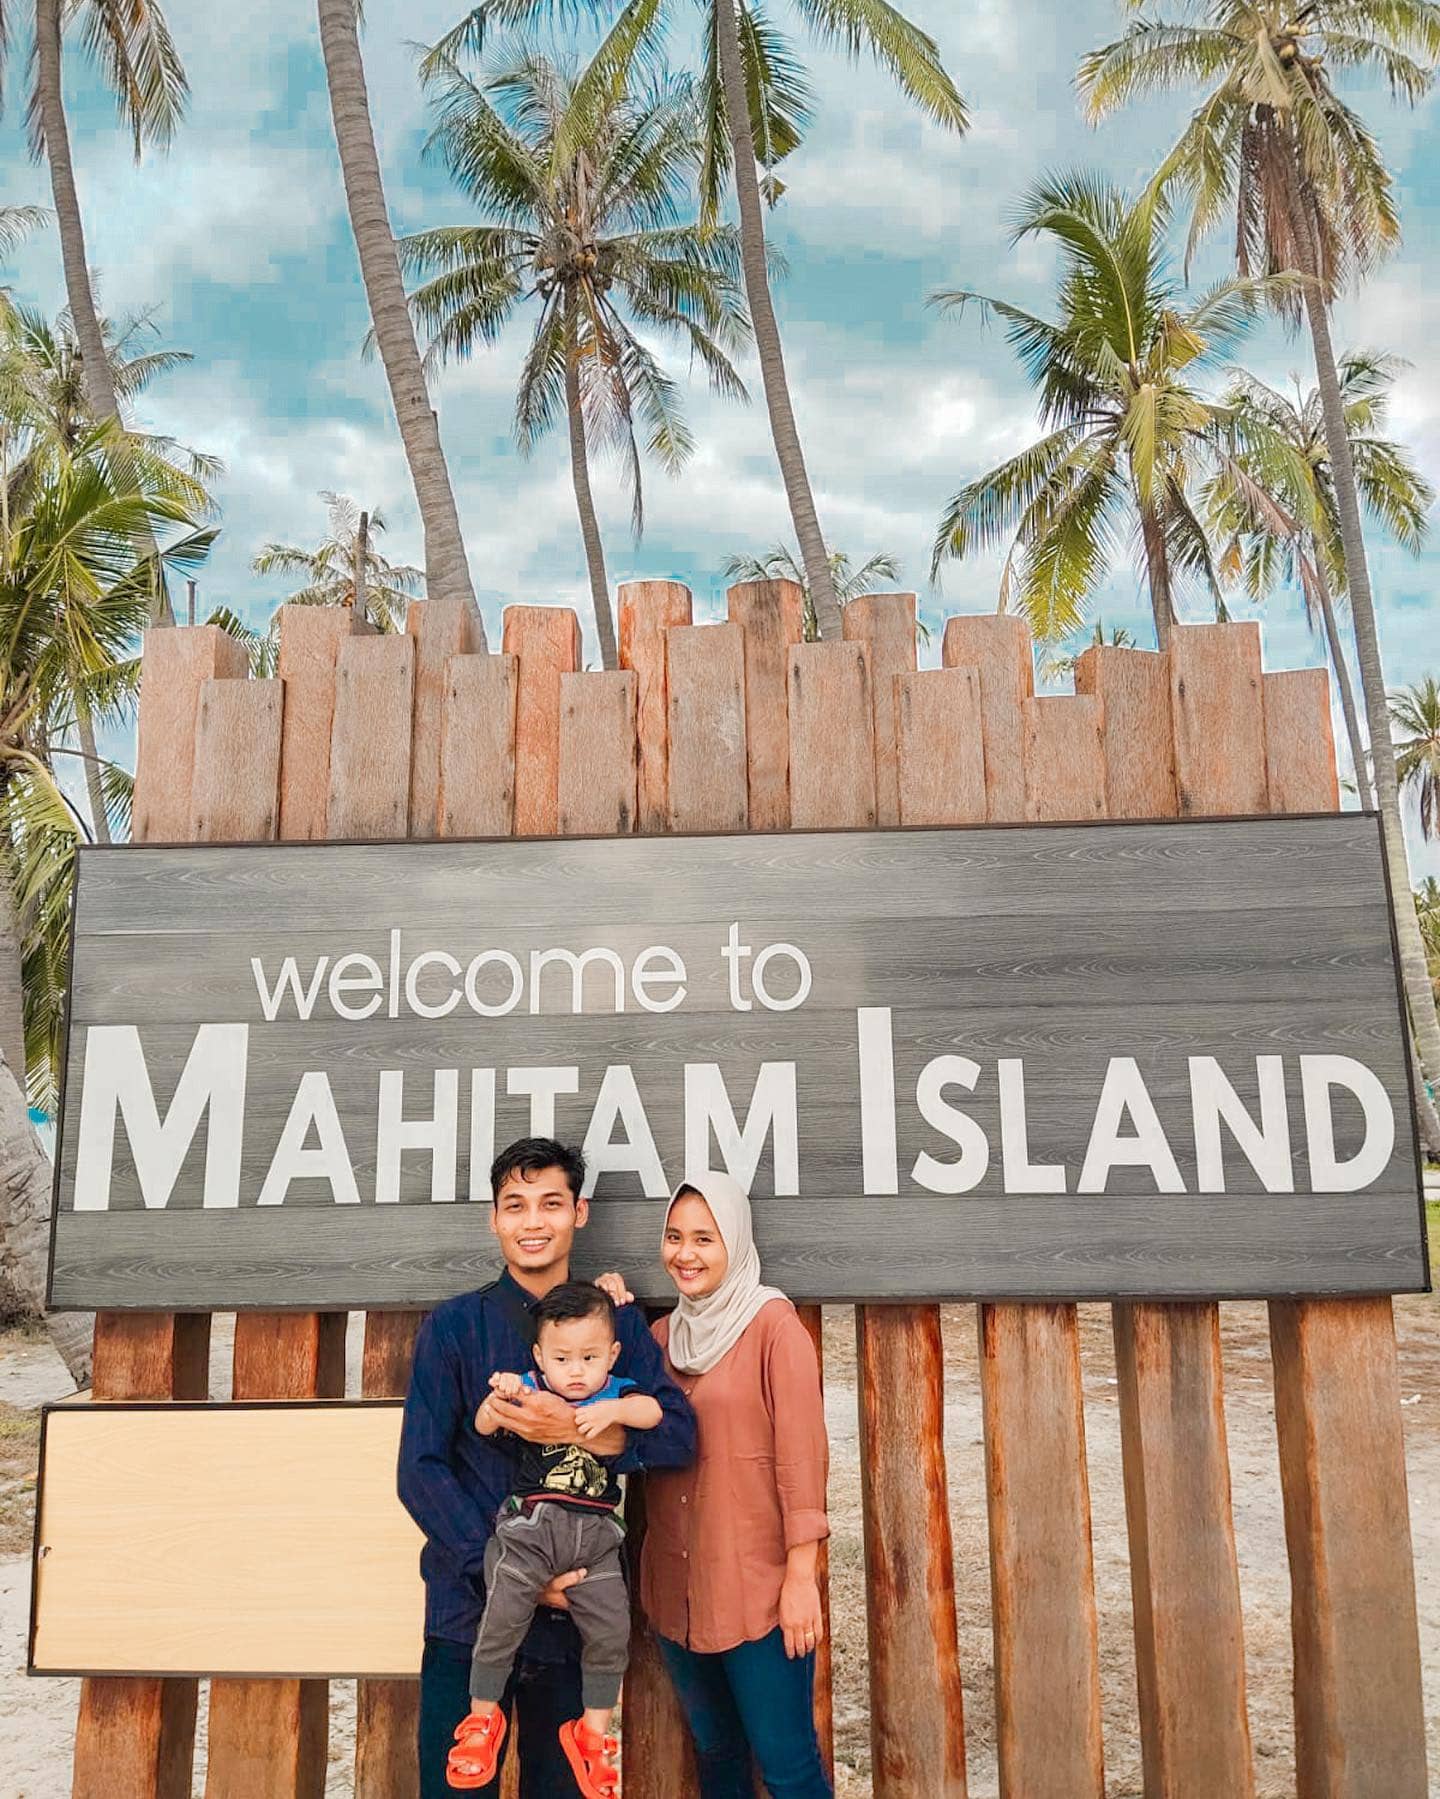 Lokasi Pulau Mahitam Lampung Image From @noviawalibramm